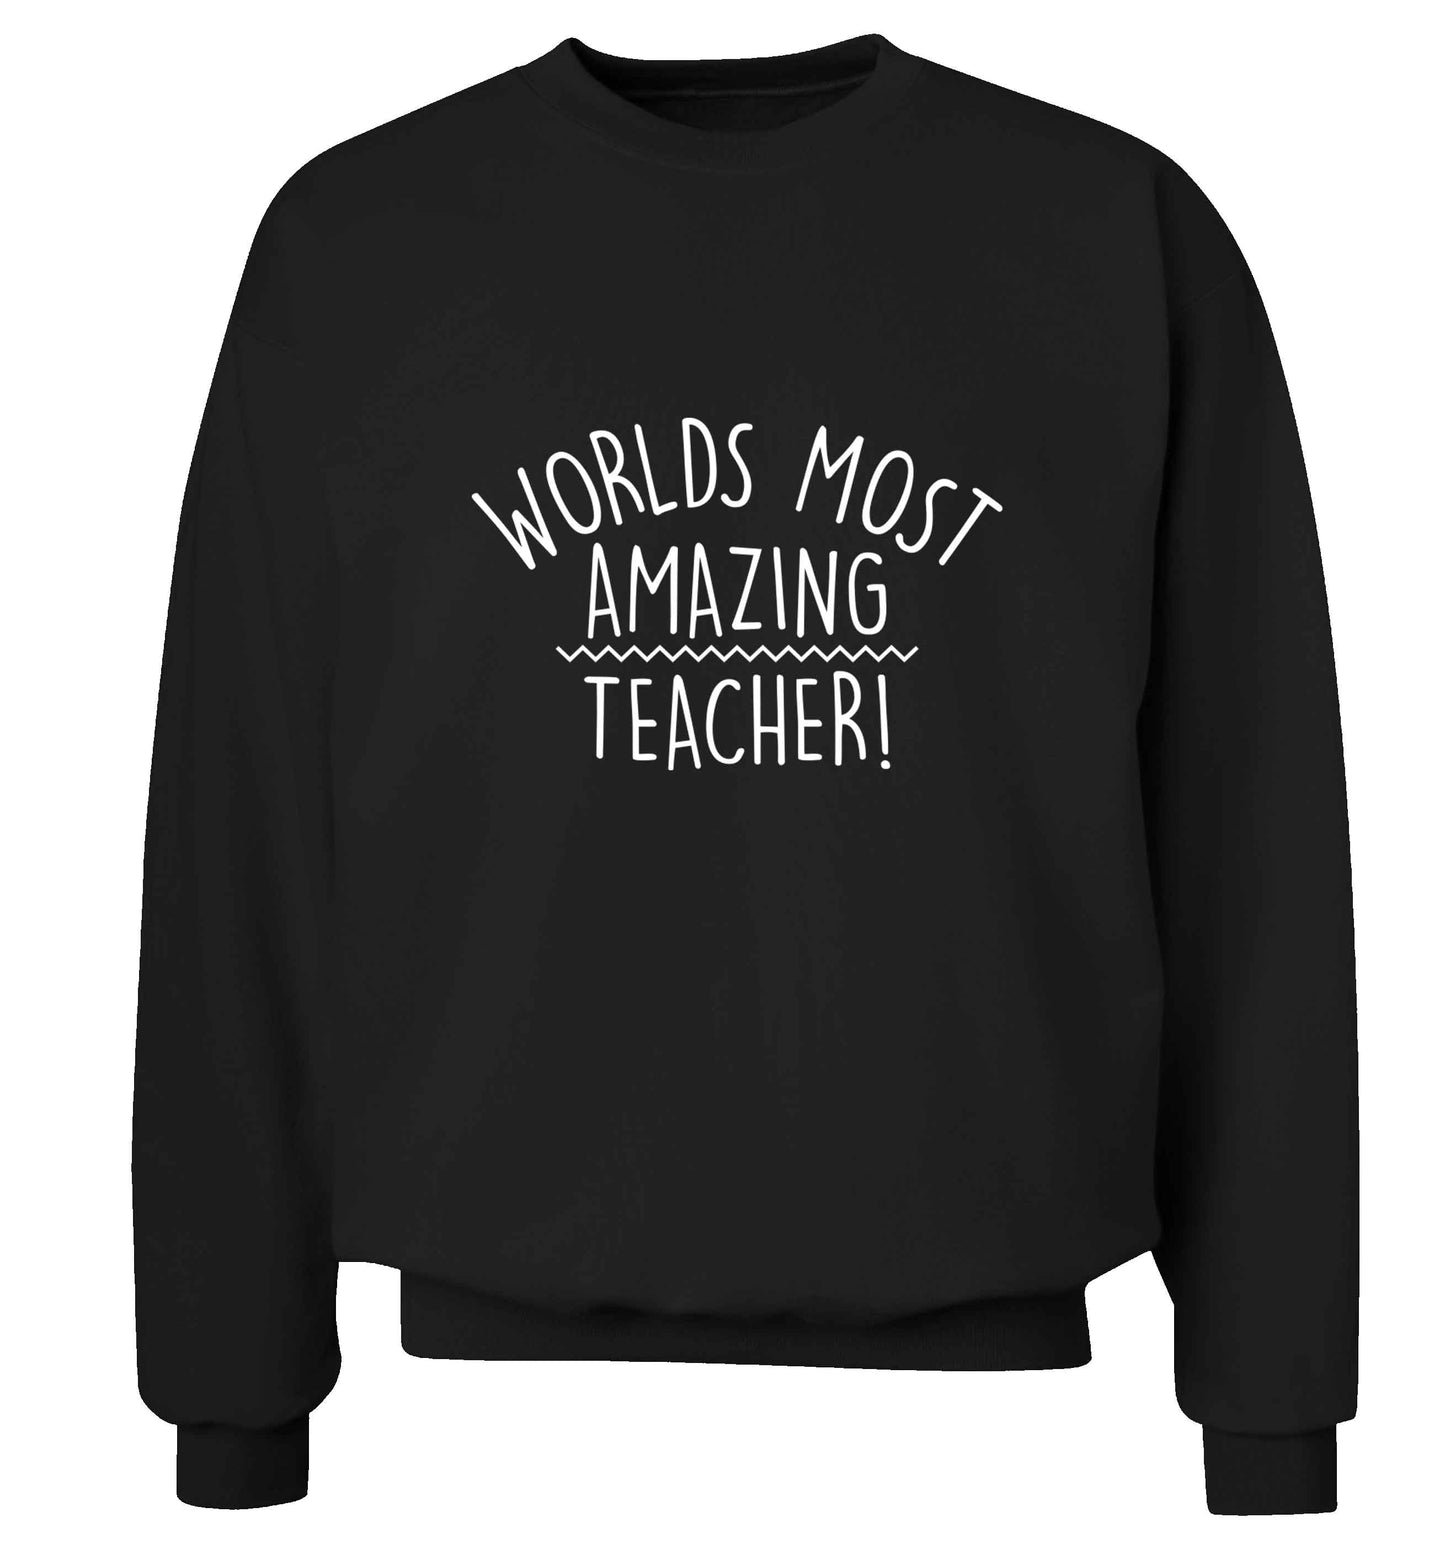 Worlds most amazing teacher adult's unisex black sweater 2XL